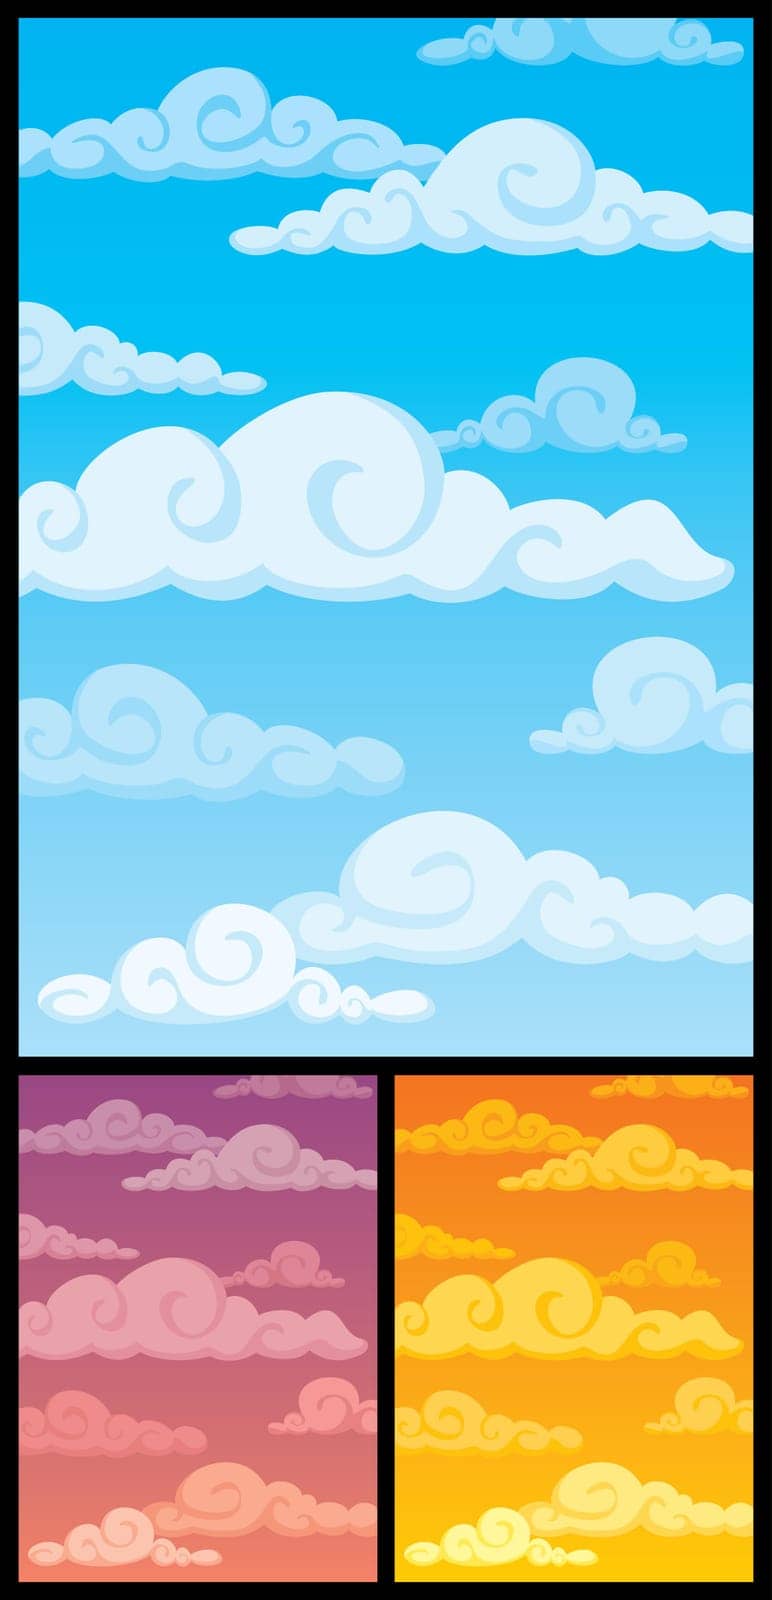 Cloudscape by Malchev